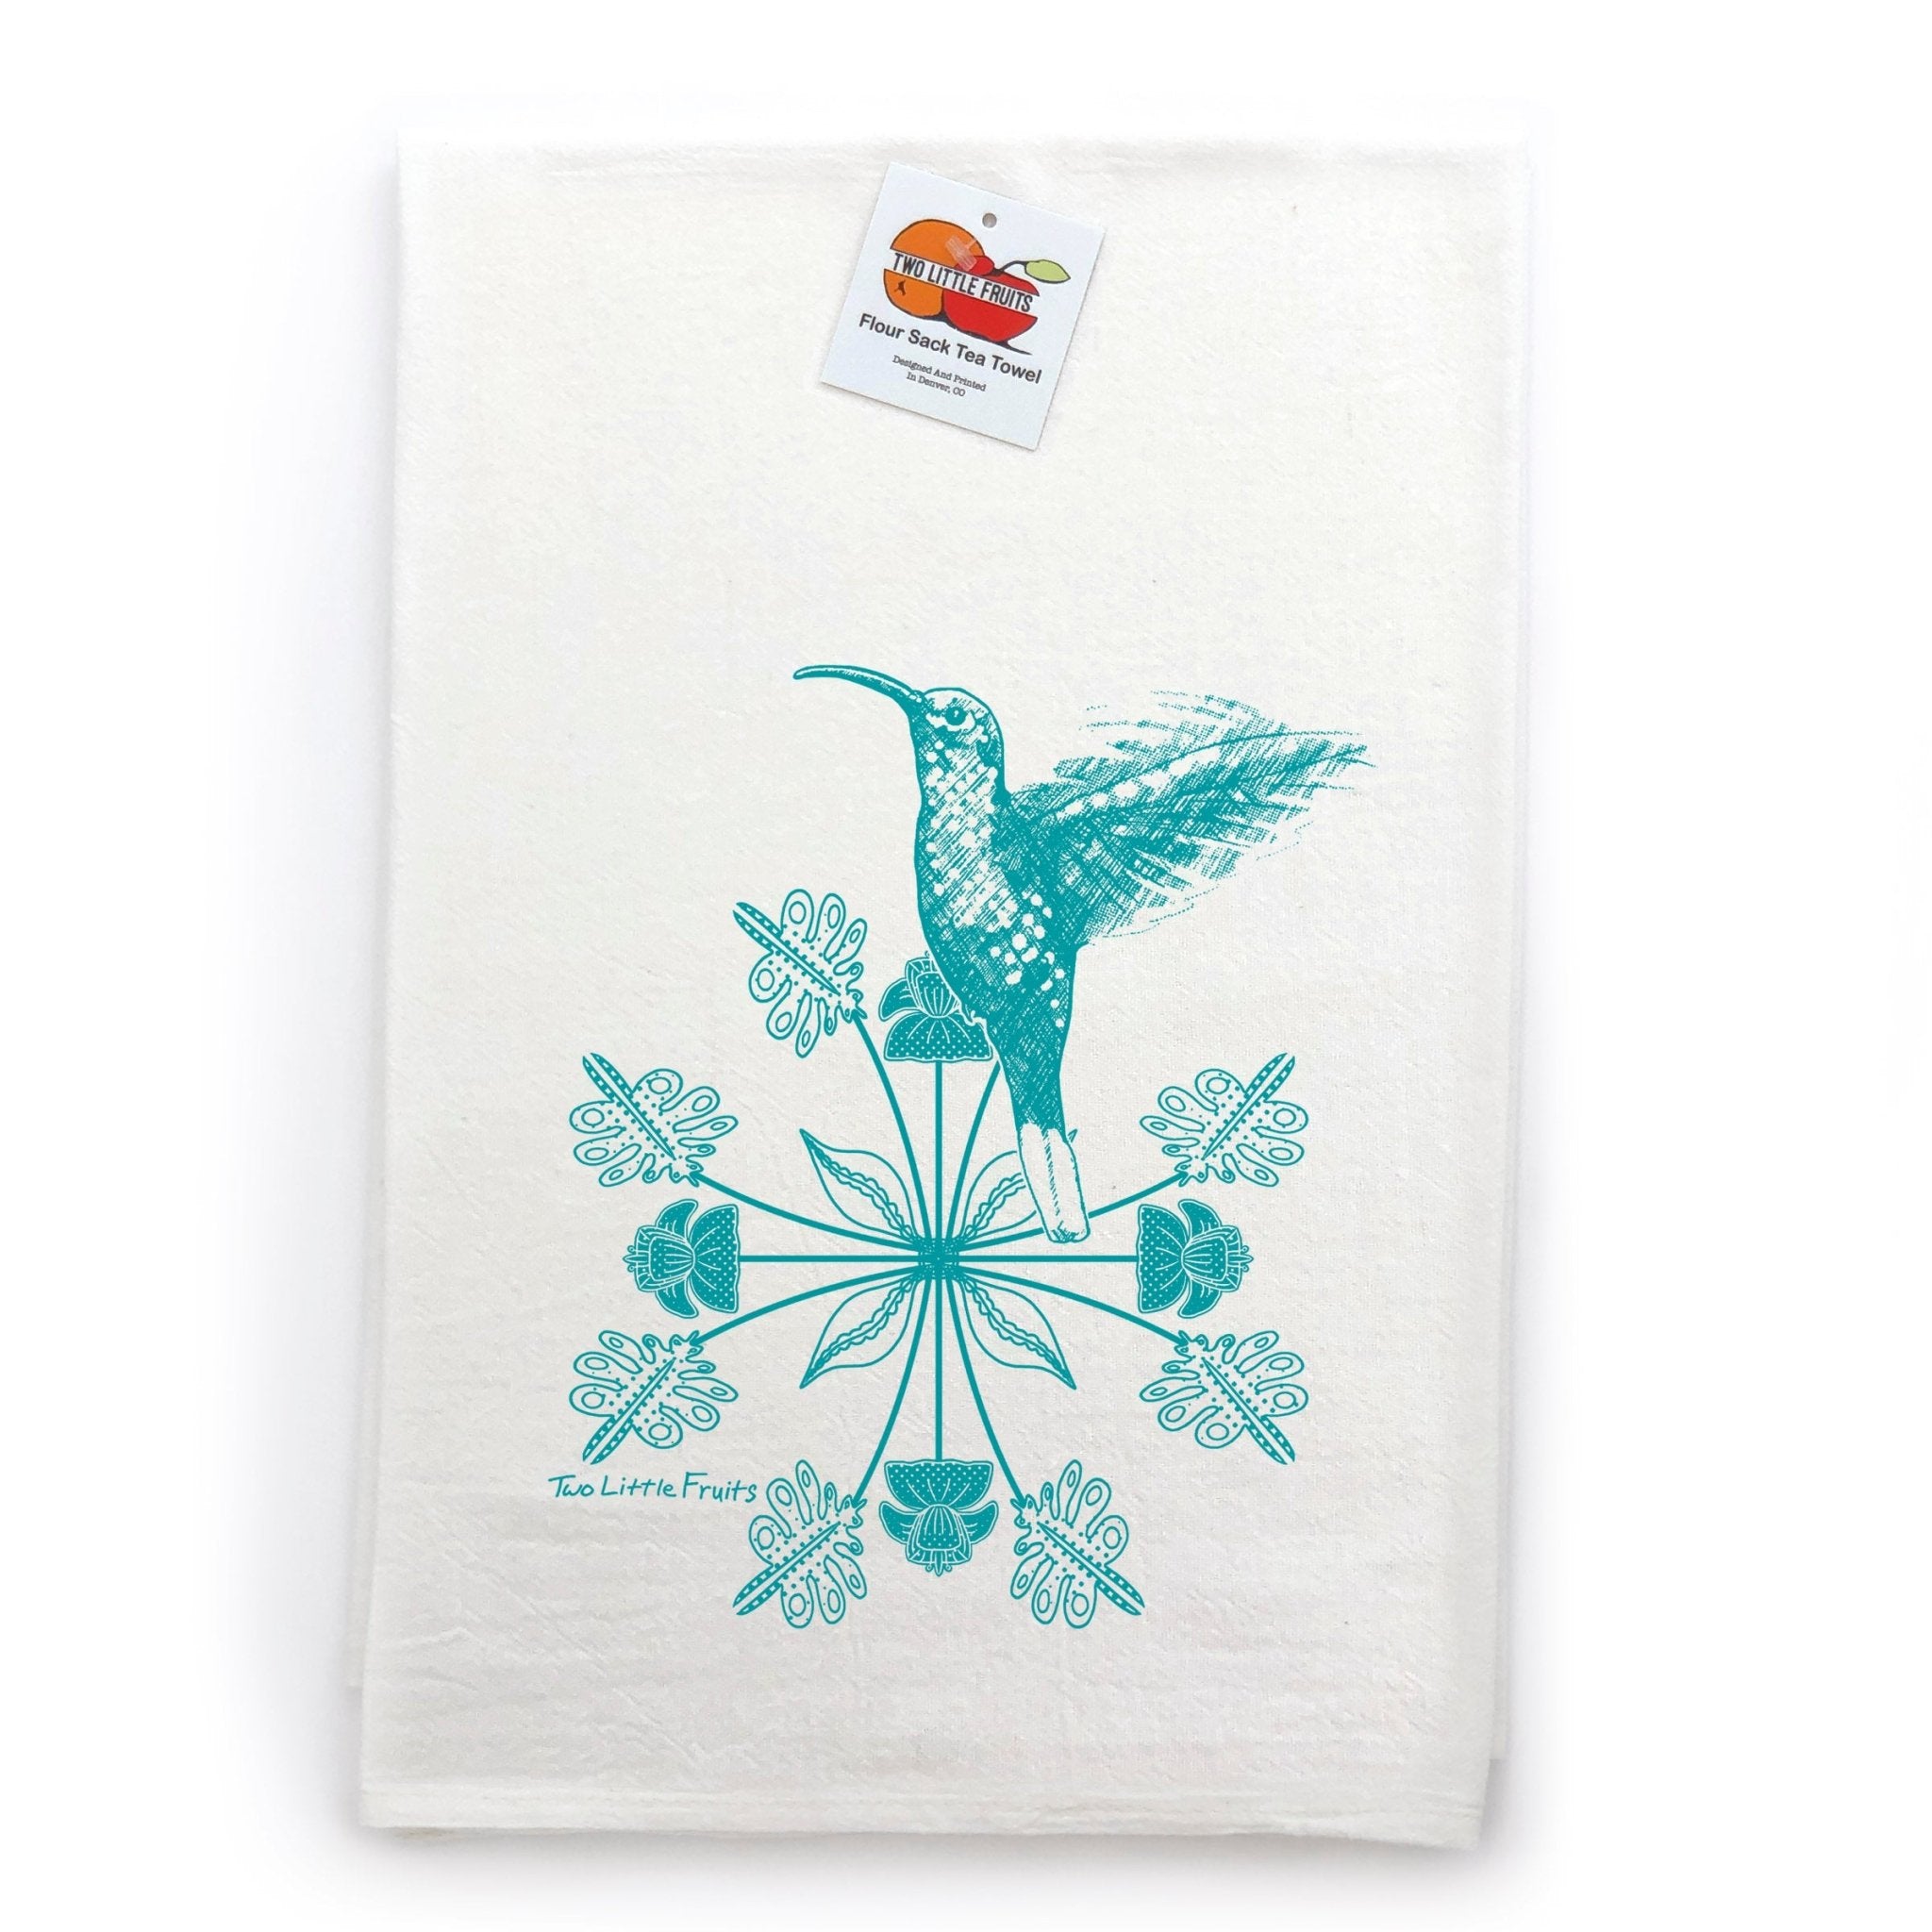 Hummingbird Tea Towel - Two Little Fruits